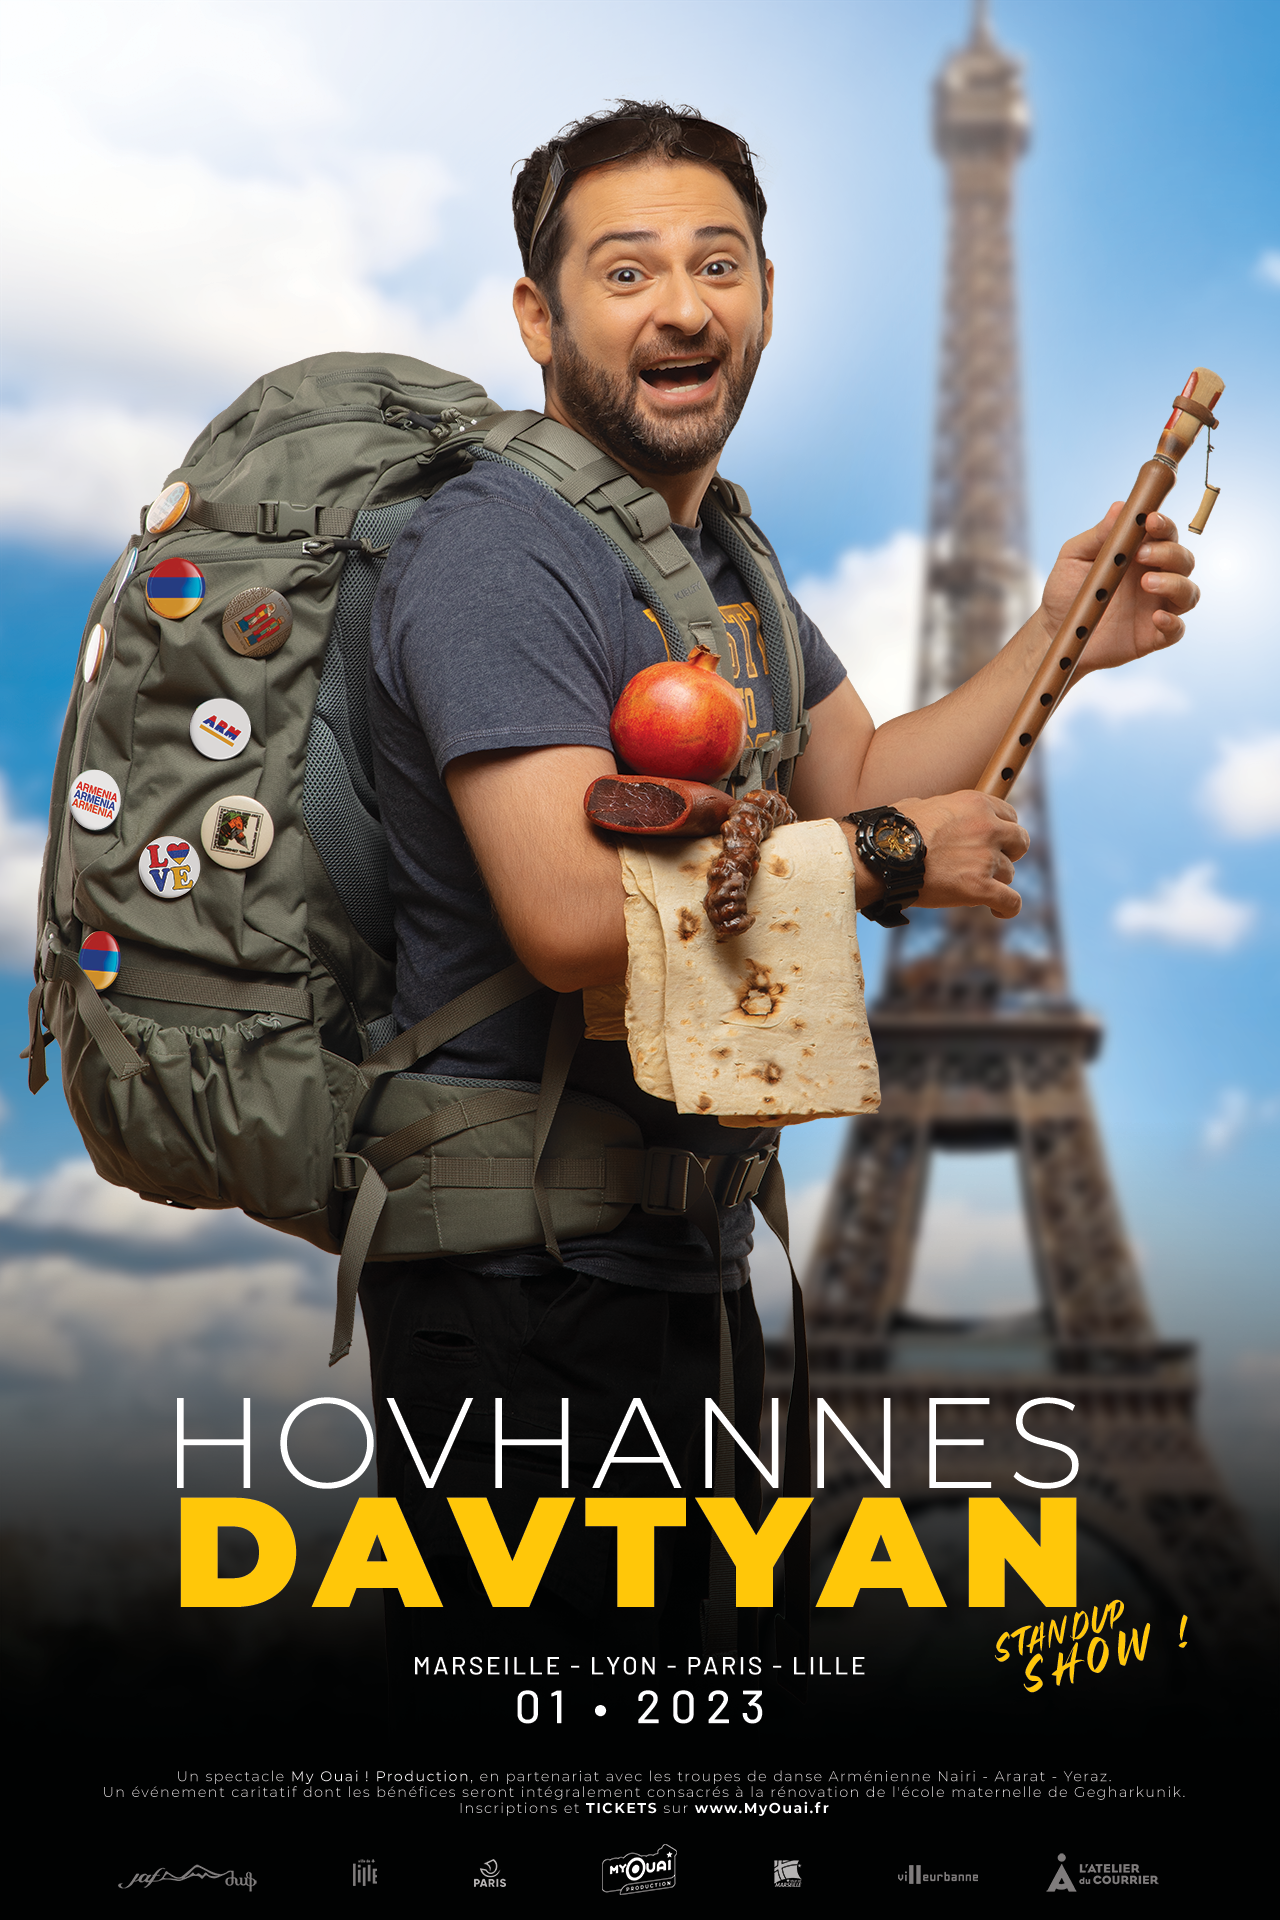 Hovhannes Davtyan France Janvier 2023 | © My Ouai ! Production 2022